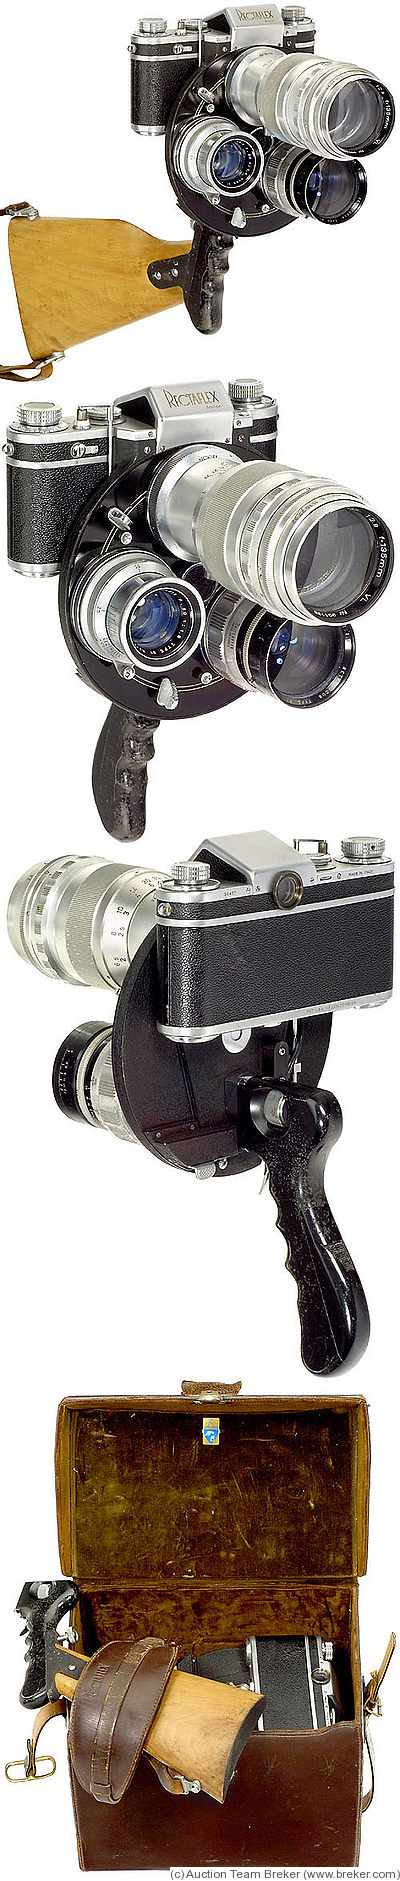 Rectaflex Starea: Rectaflex Rotor camera